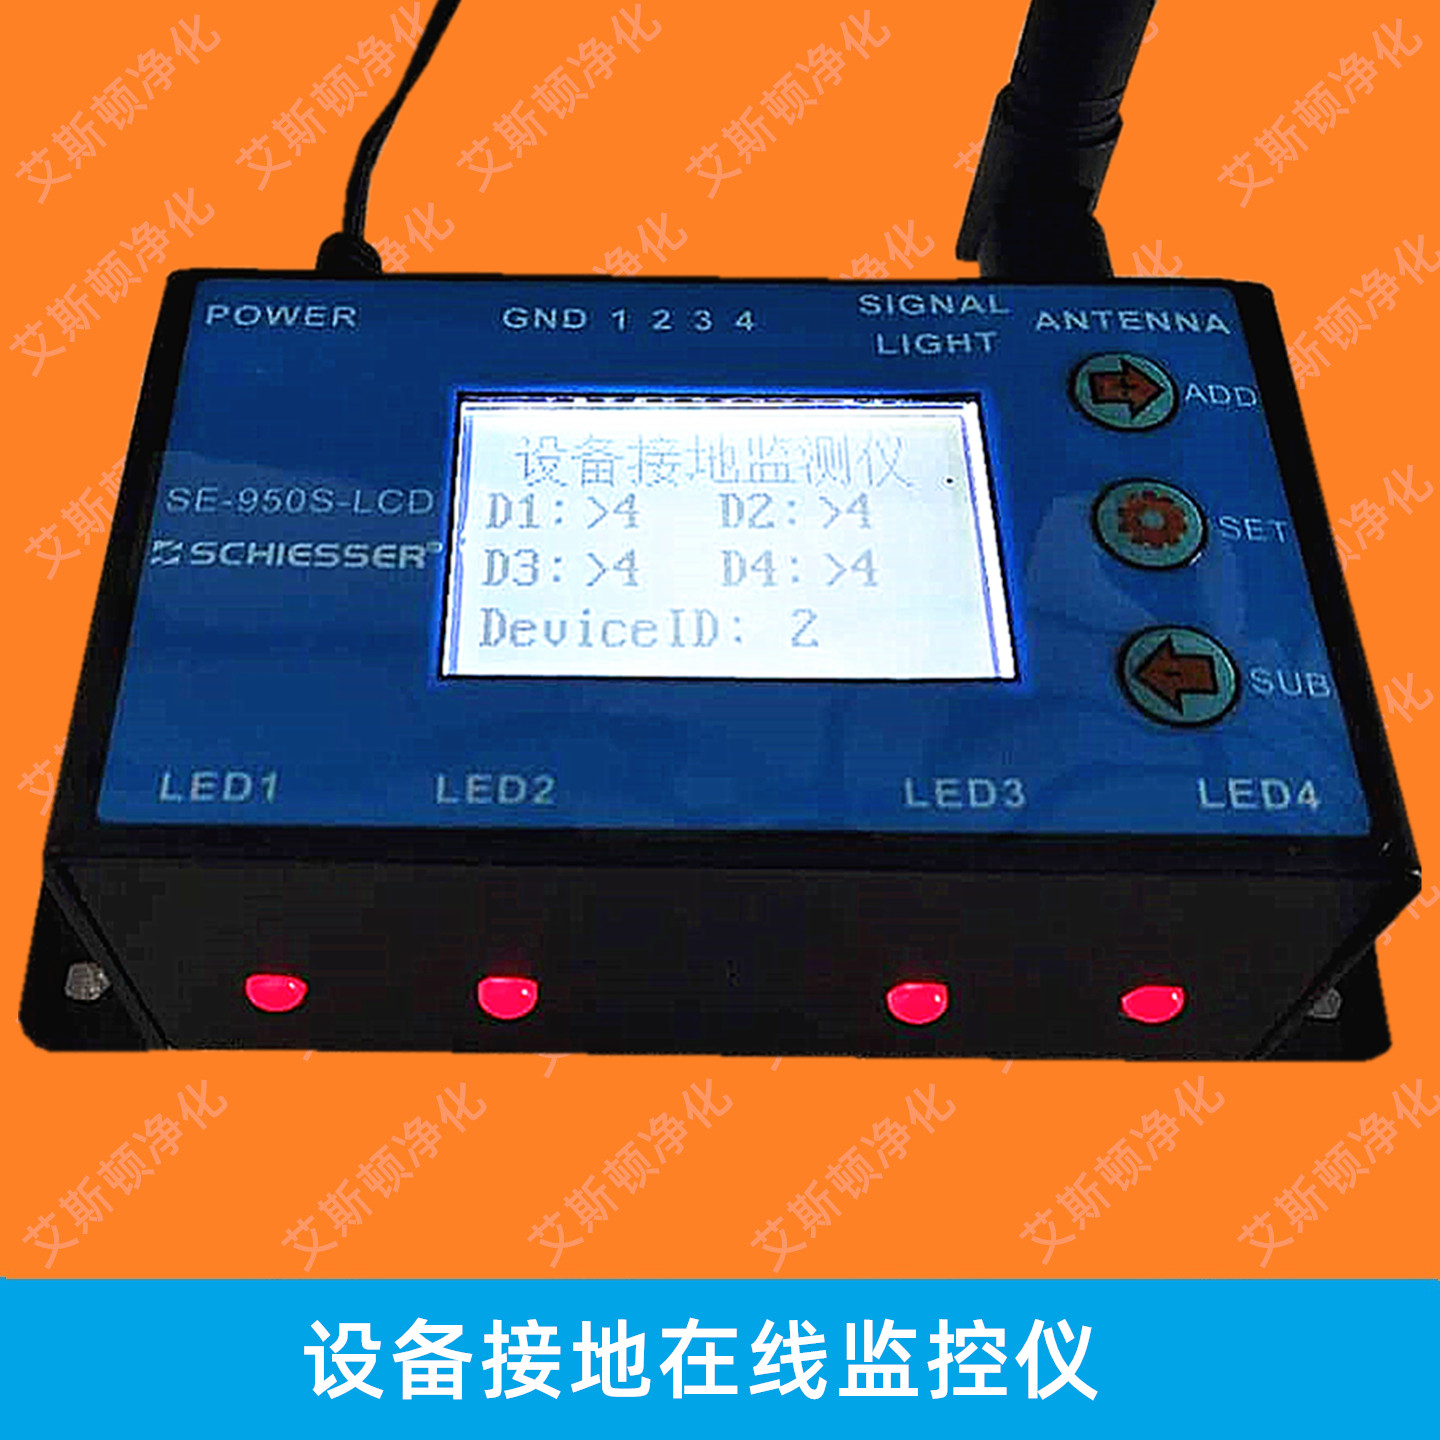 SE-950S-LCD-3设备接地在线监控仪_副本.jpg